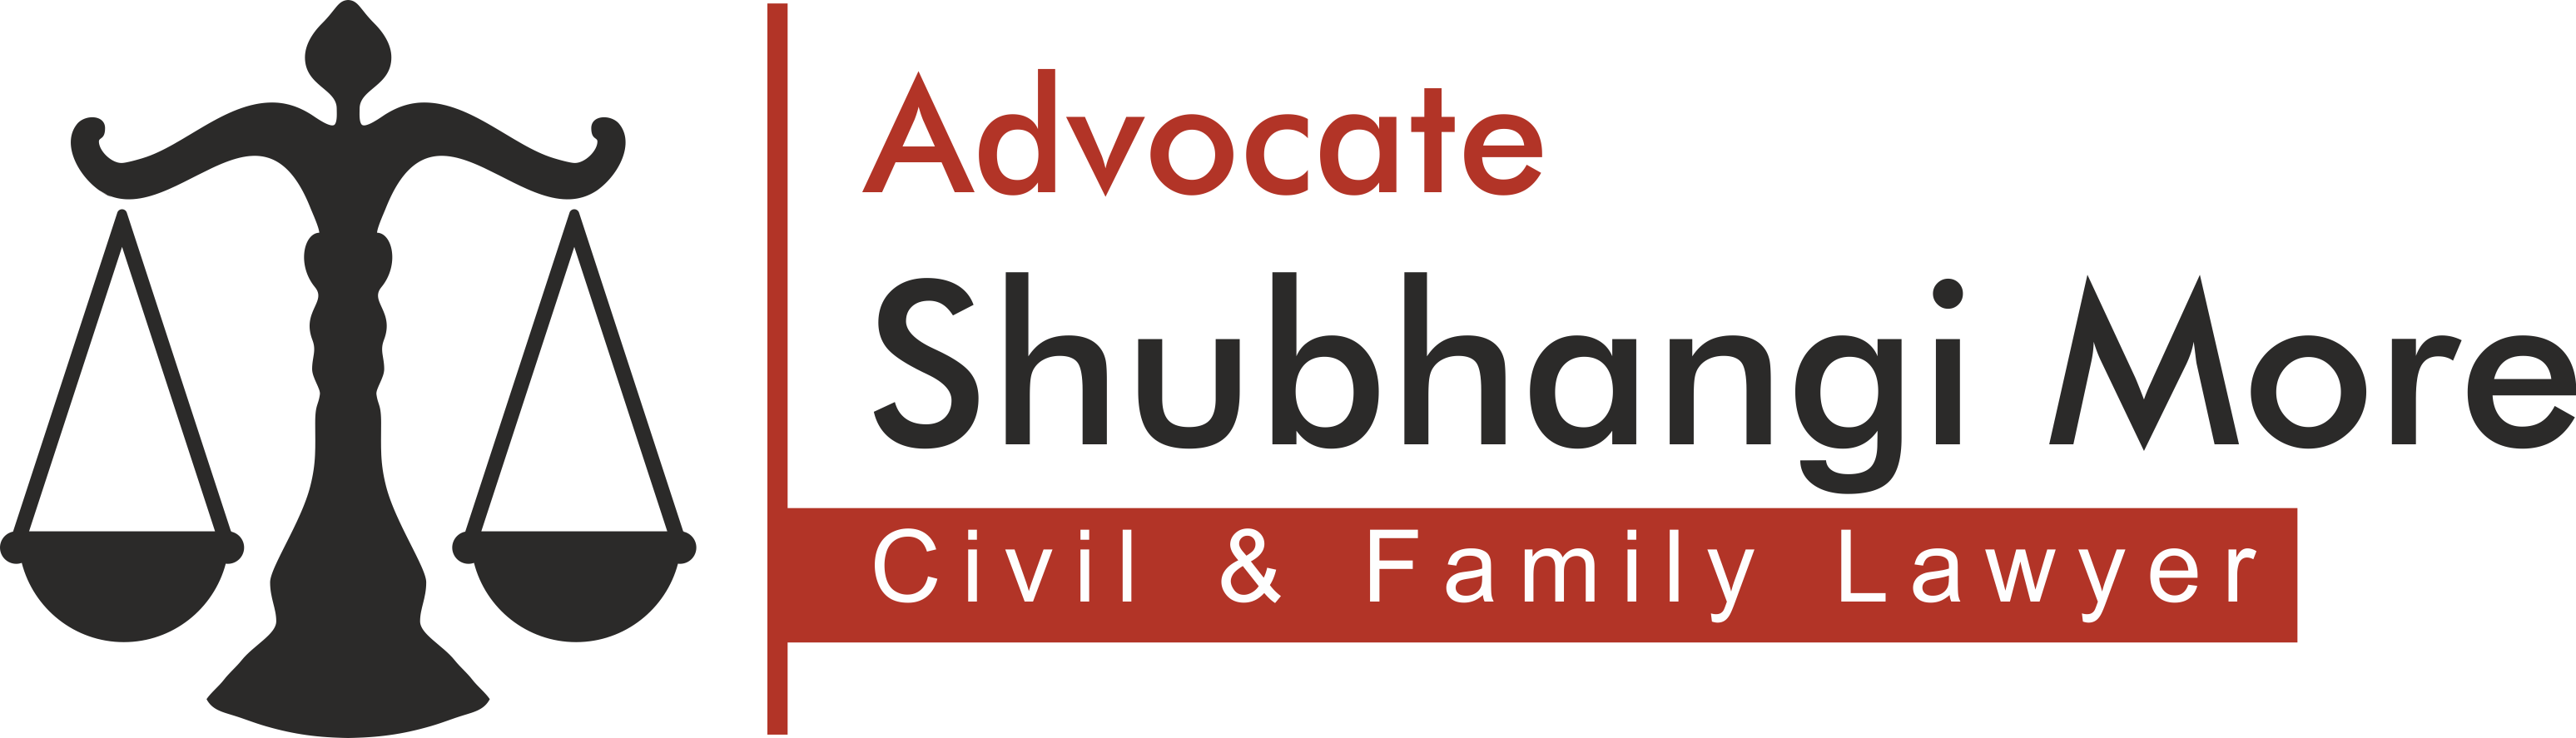 Advocate Shubhangi More